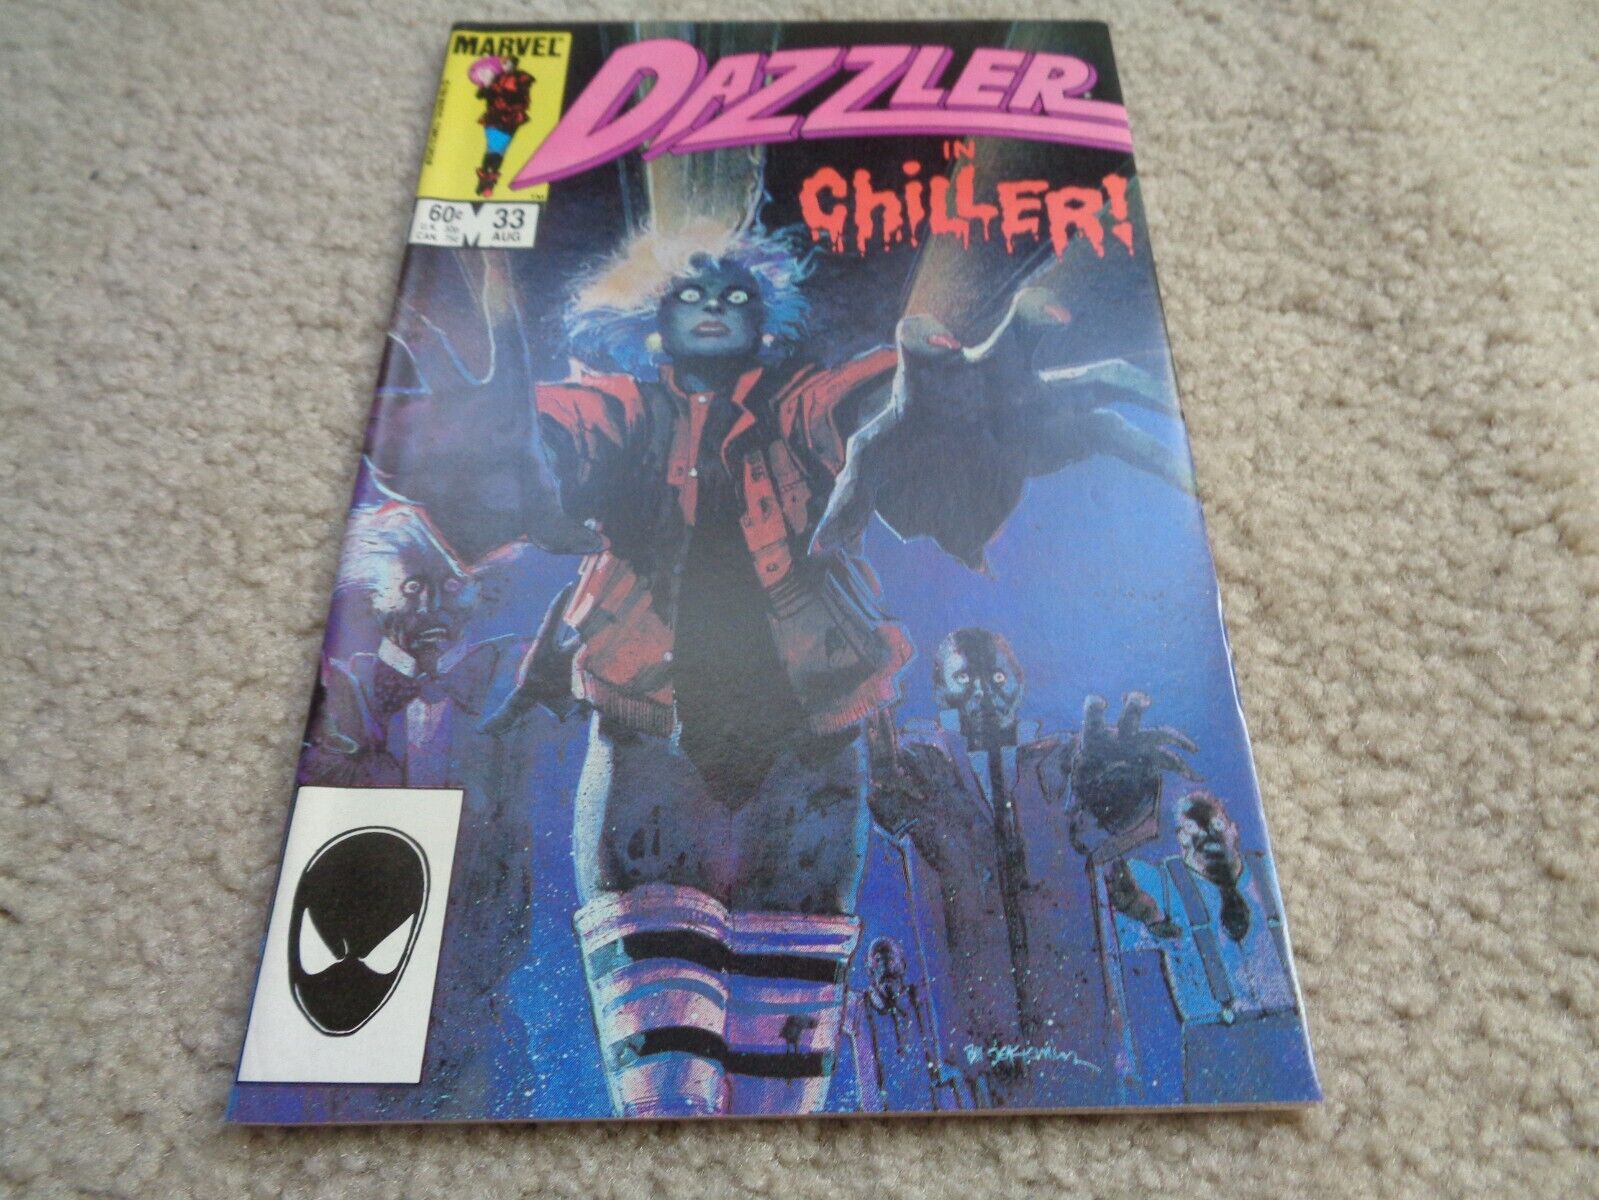 Dazzler #33 COMIC BOOK 1984 MICHAEL JACKSON THRILLER HOMAGE COVER HOT!! KEY